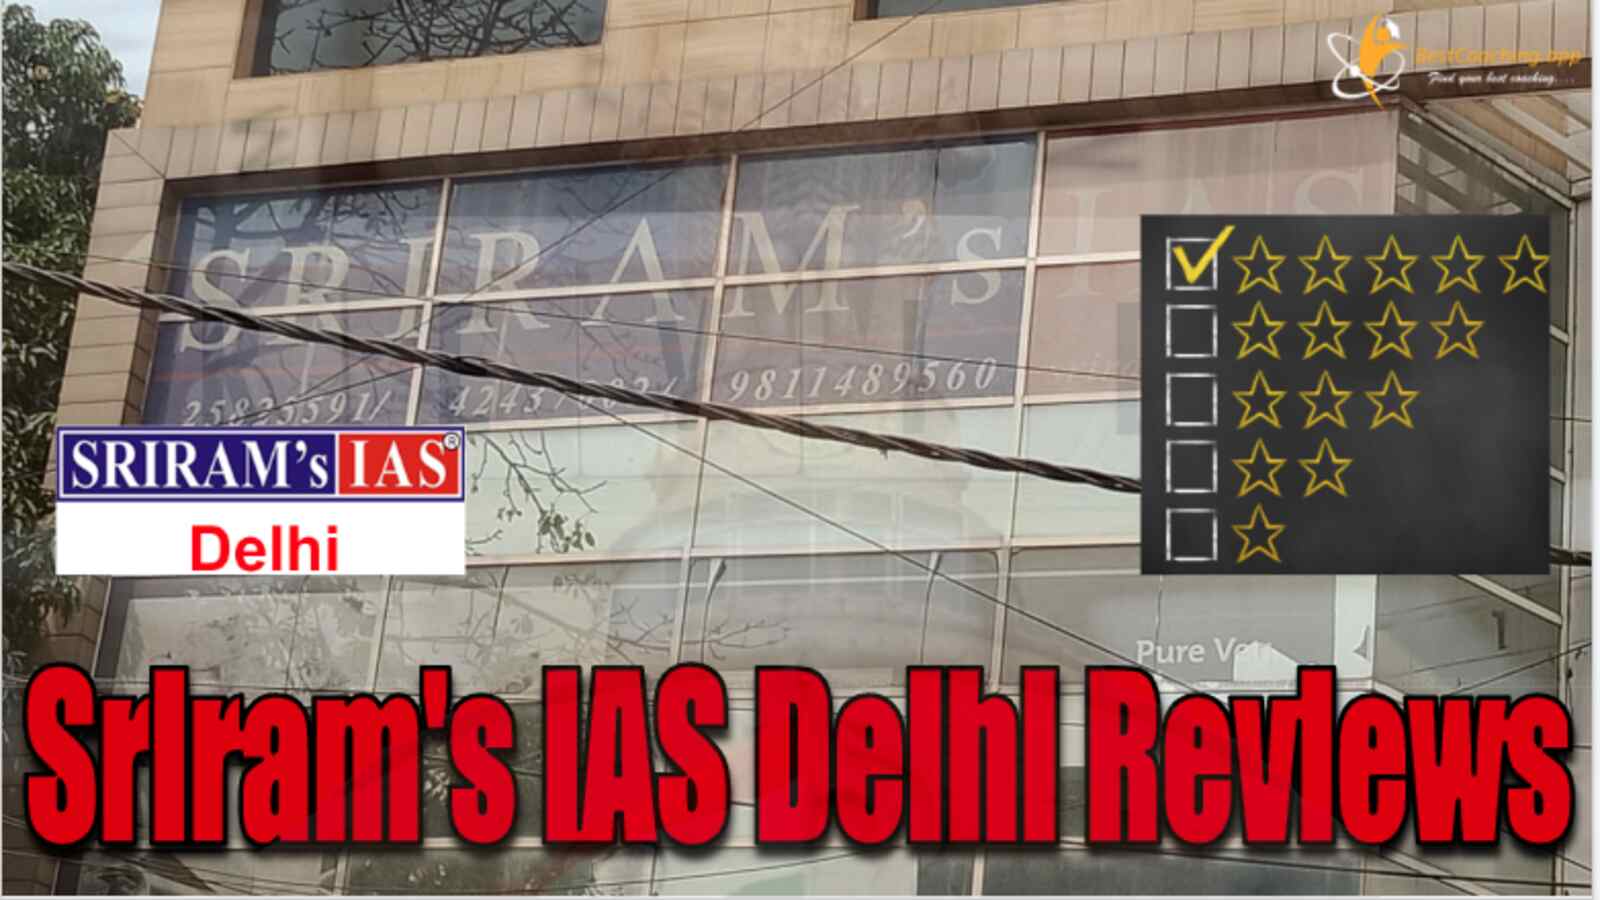 Sriram's IAS Delhi Reviews